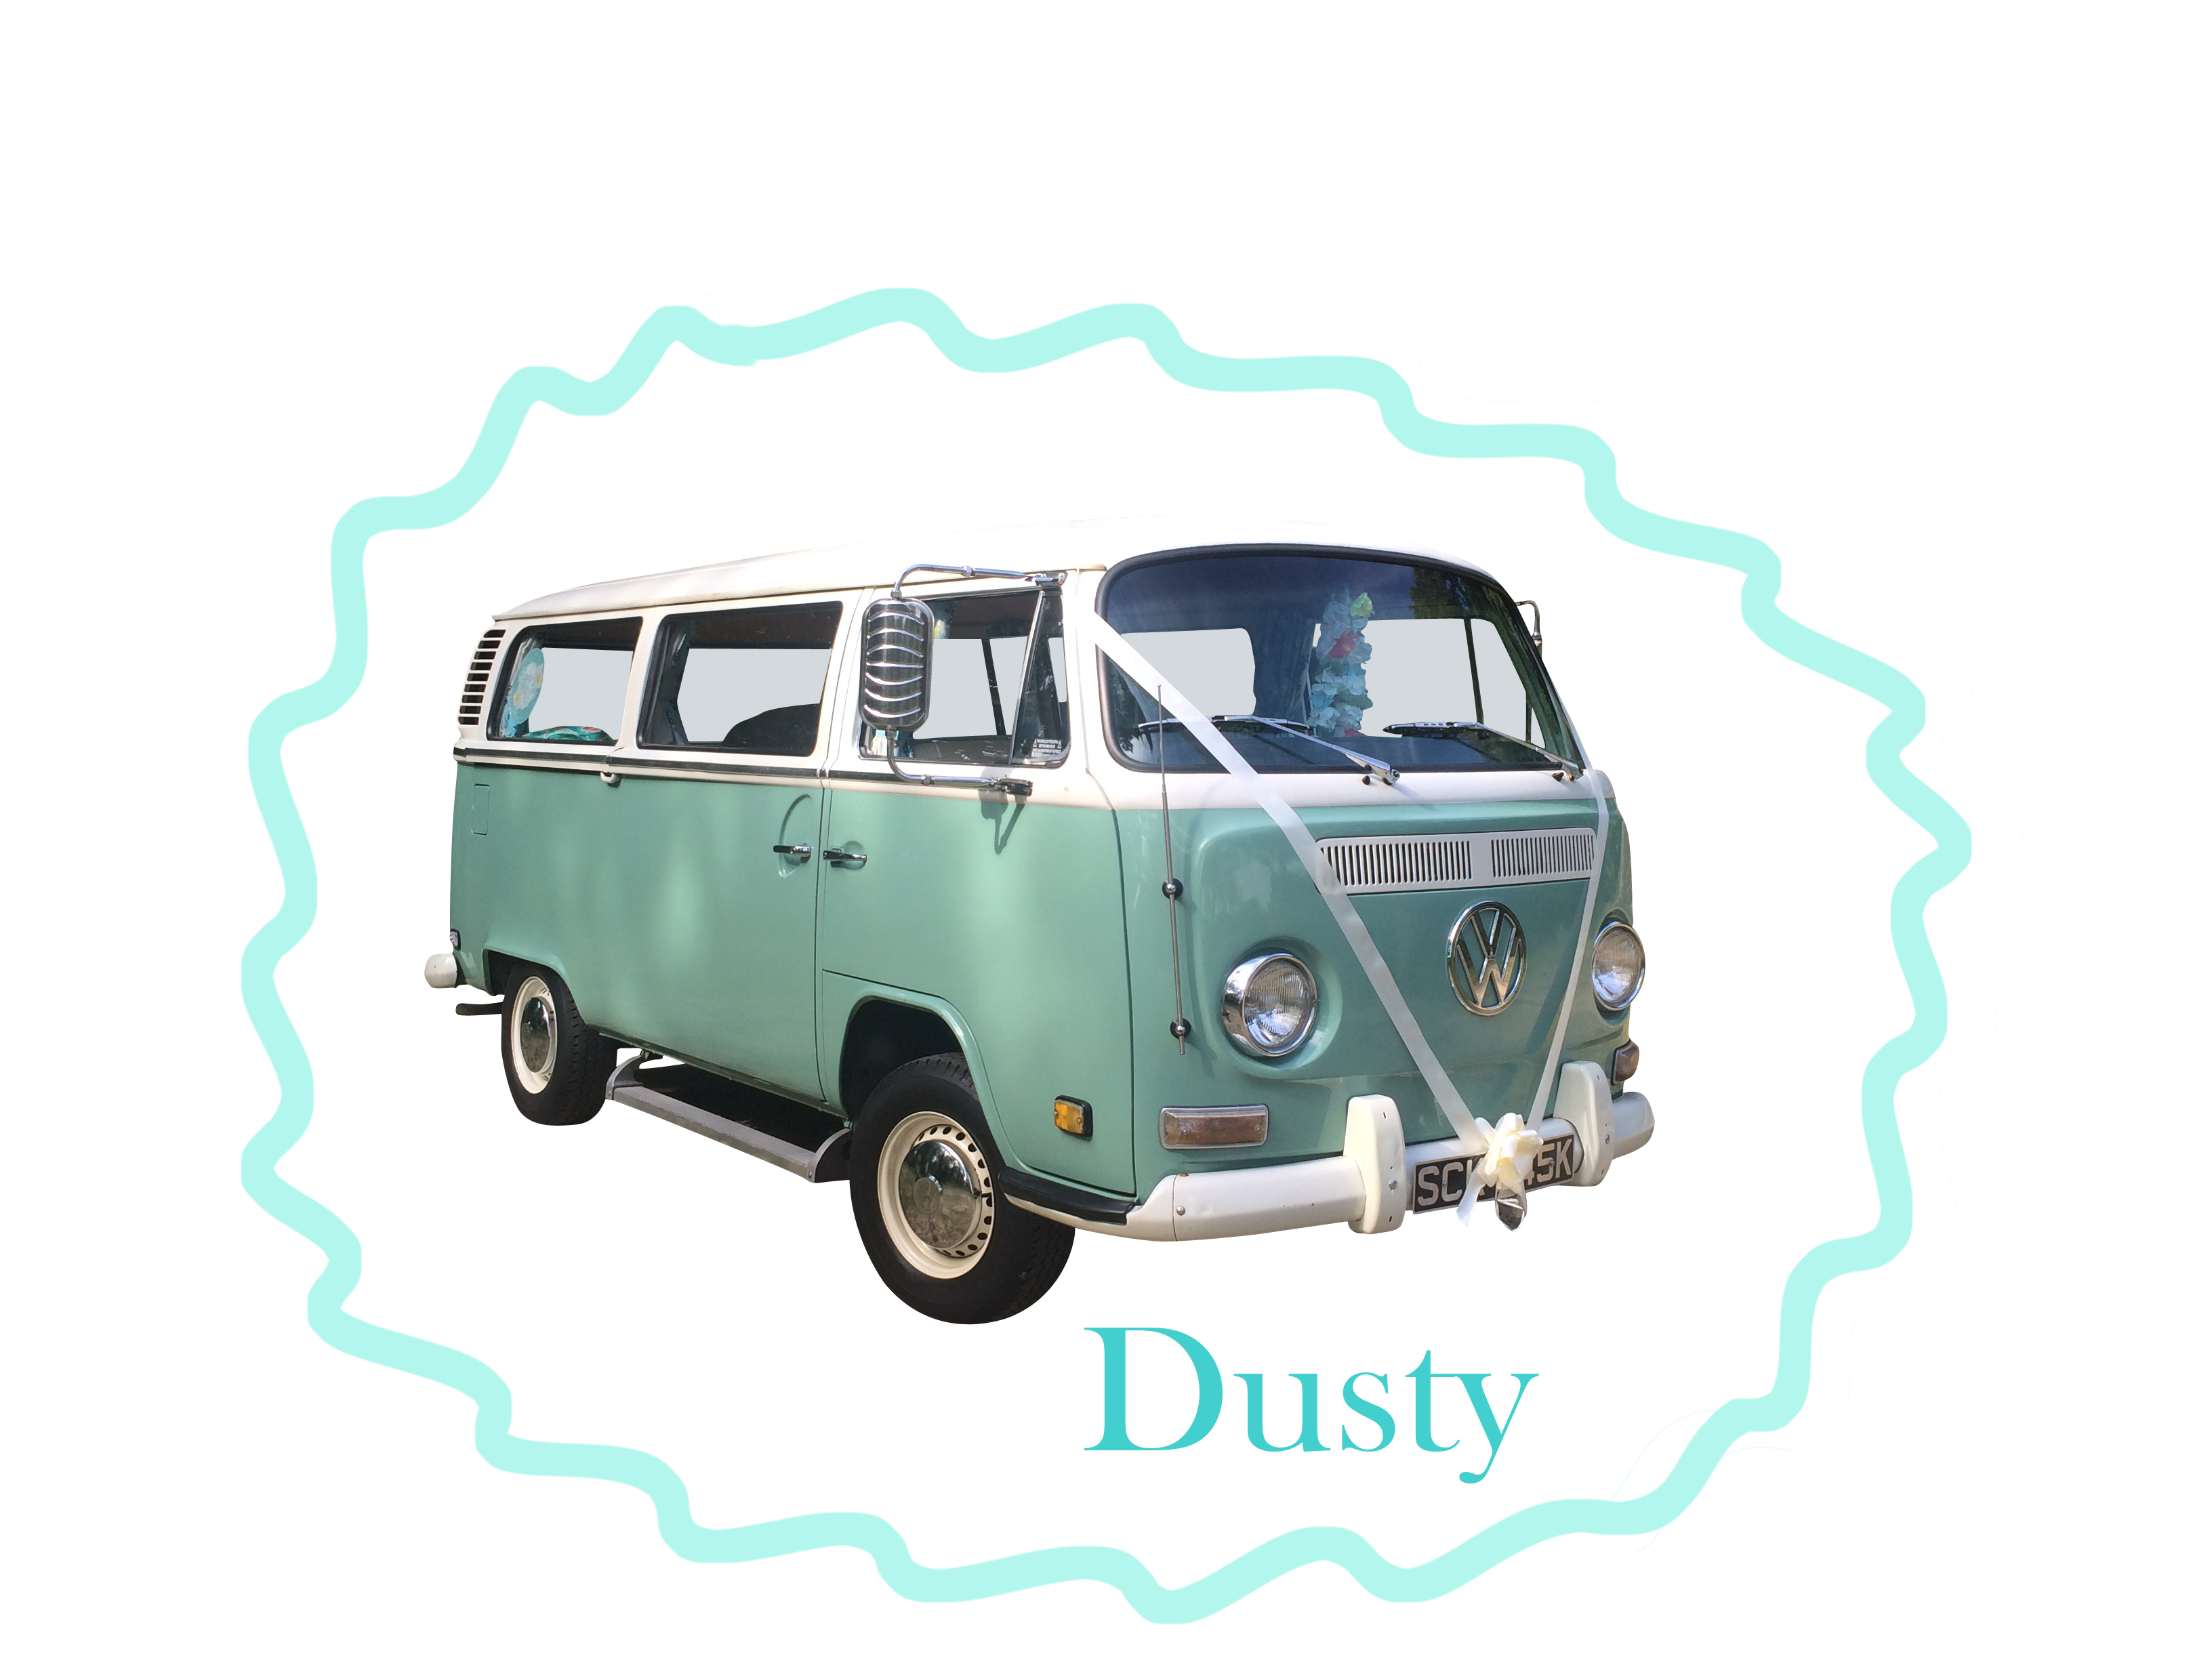 Dusty VW wedding hire van